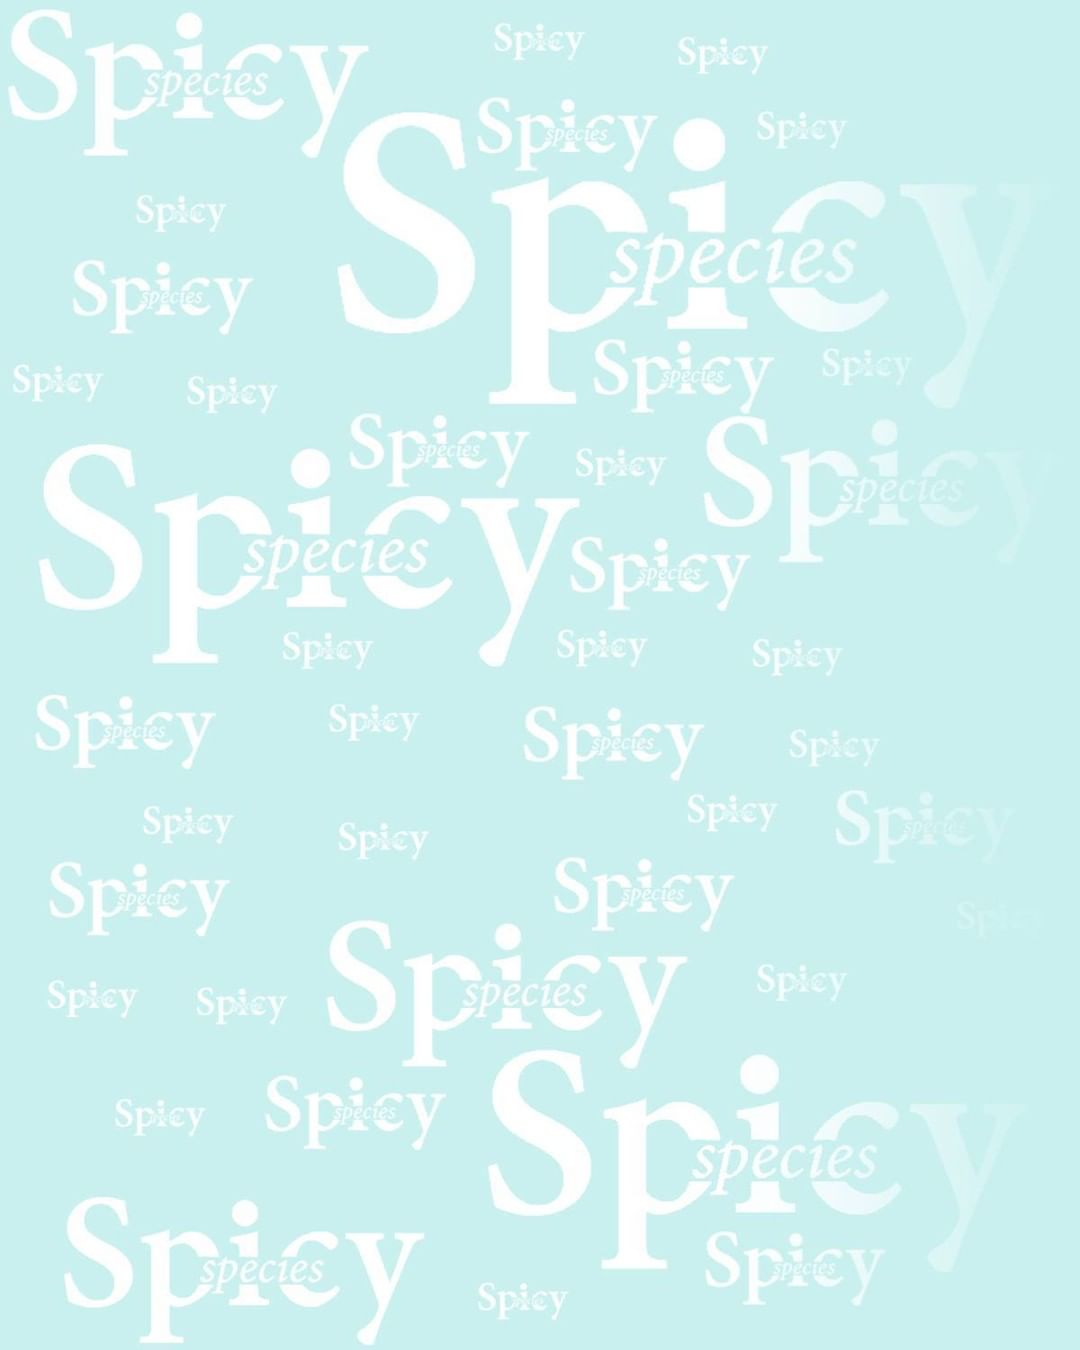 ISSA PLUS - Посмотри на сайте нашу новую коллекцию Spicy Species!
Cсылка в описании профиля и в сторис.
 
#issaplus #мода2020 #мода2020лето